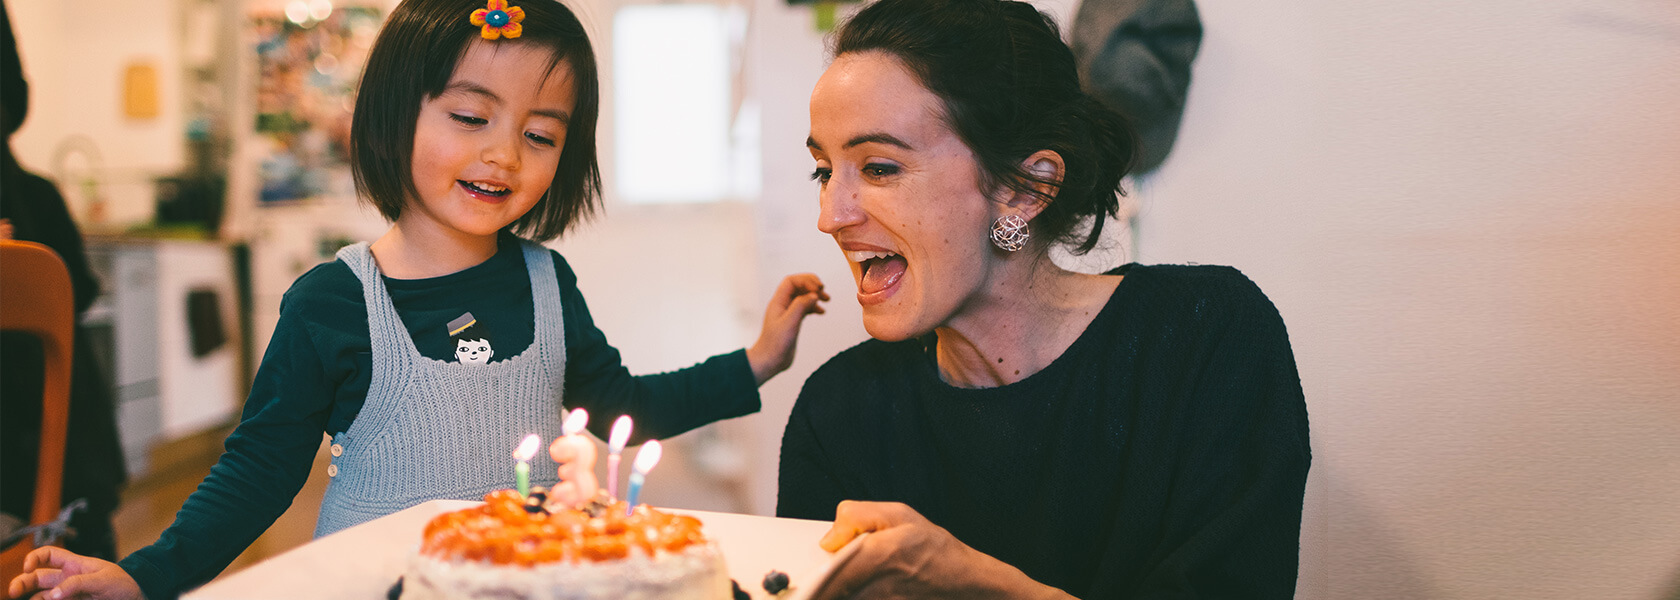 Woman and child celebrating birthday